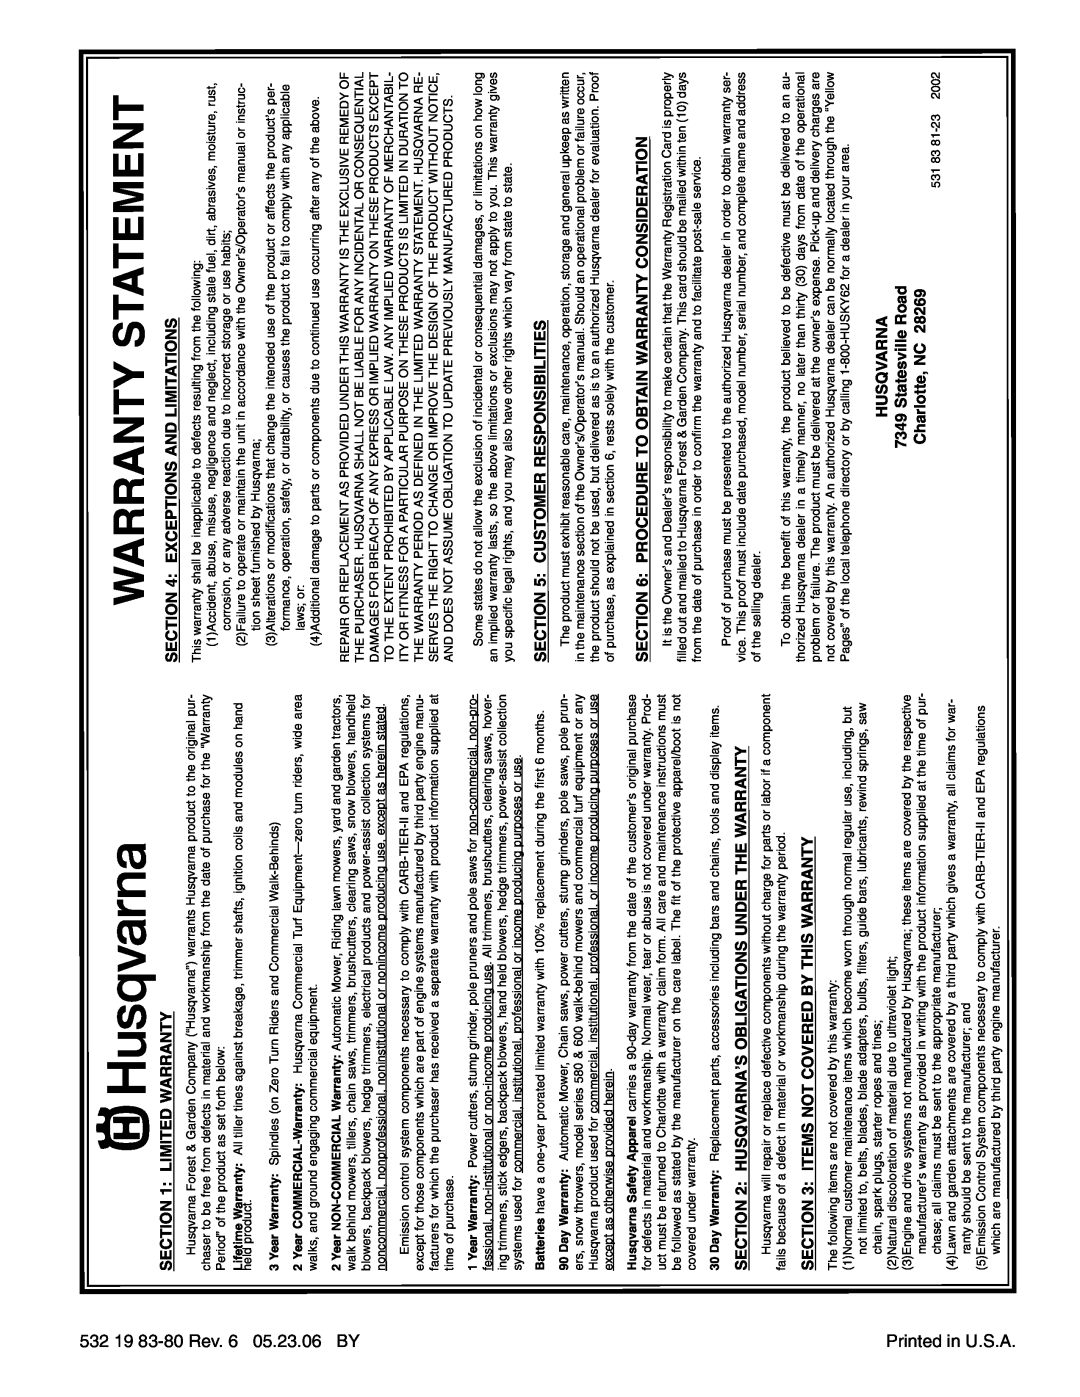 Husqvarna 927SBEXP owner manual Rantywar Tementsta, 2002 23-81, SIEIT ILIB SON PSE RR EMO STUC 5ON ITC ES, Anr Avq Suh 